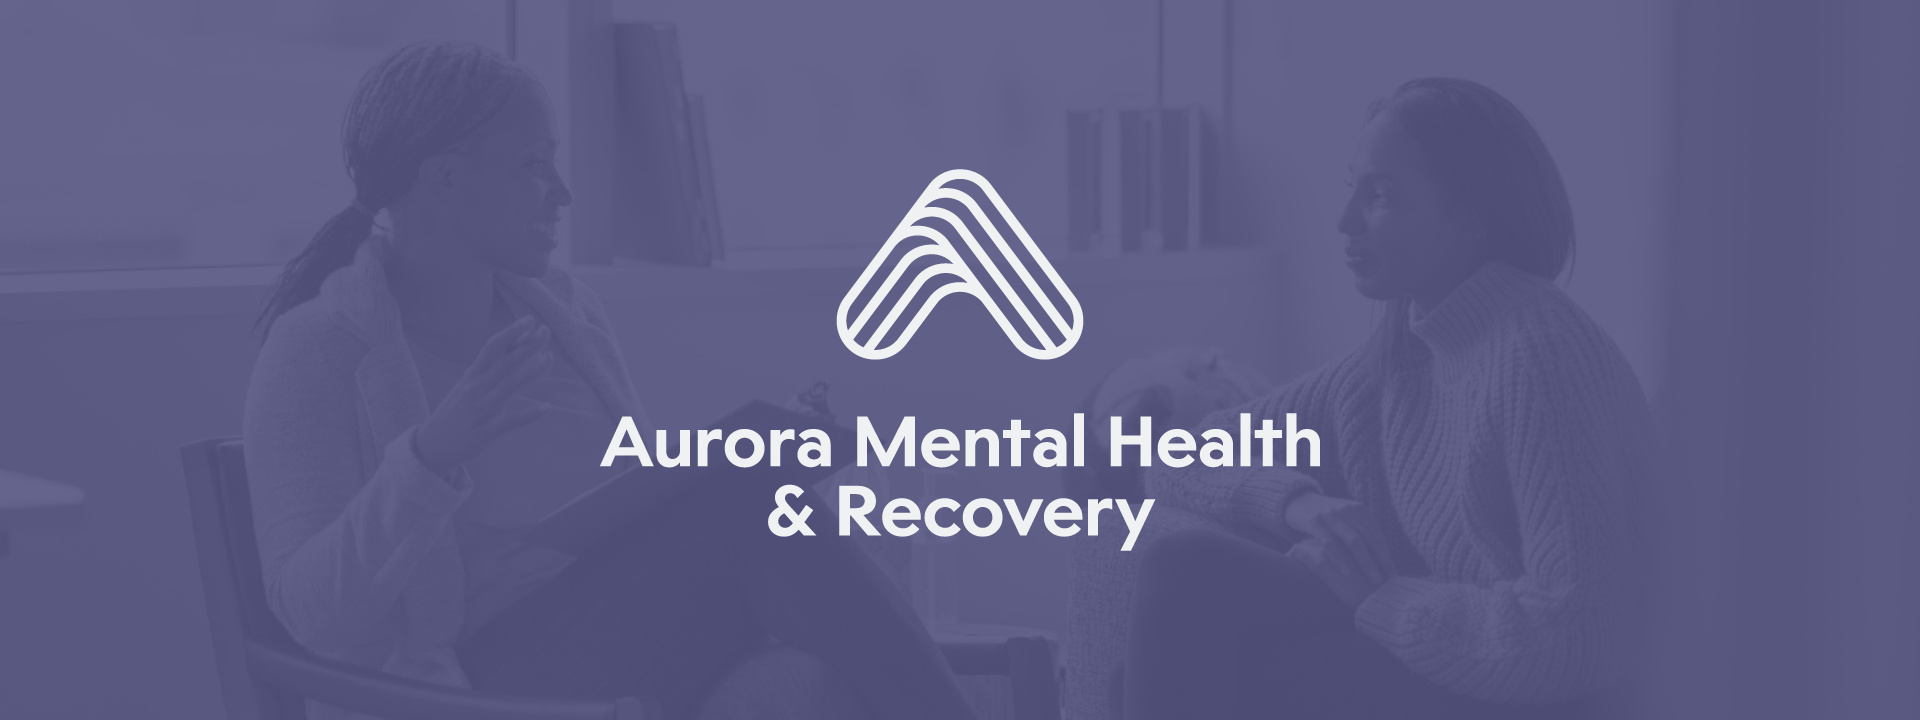 Aurora Mental Health & Recovery Brand Identity